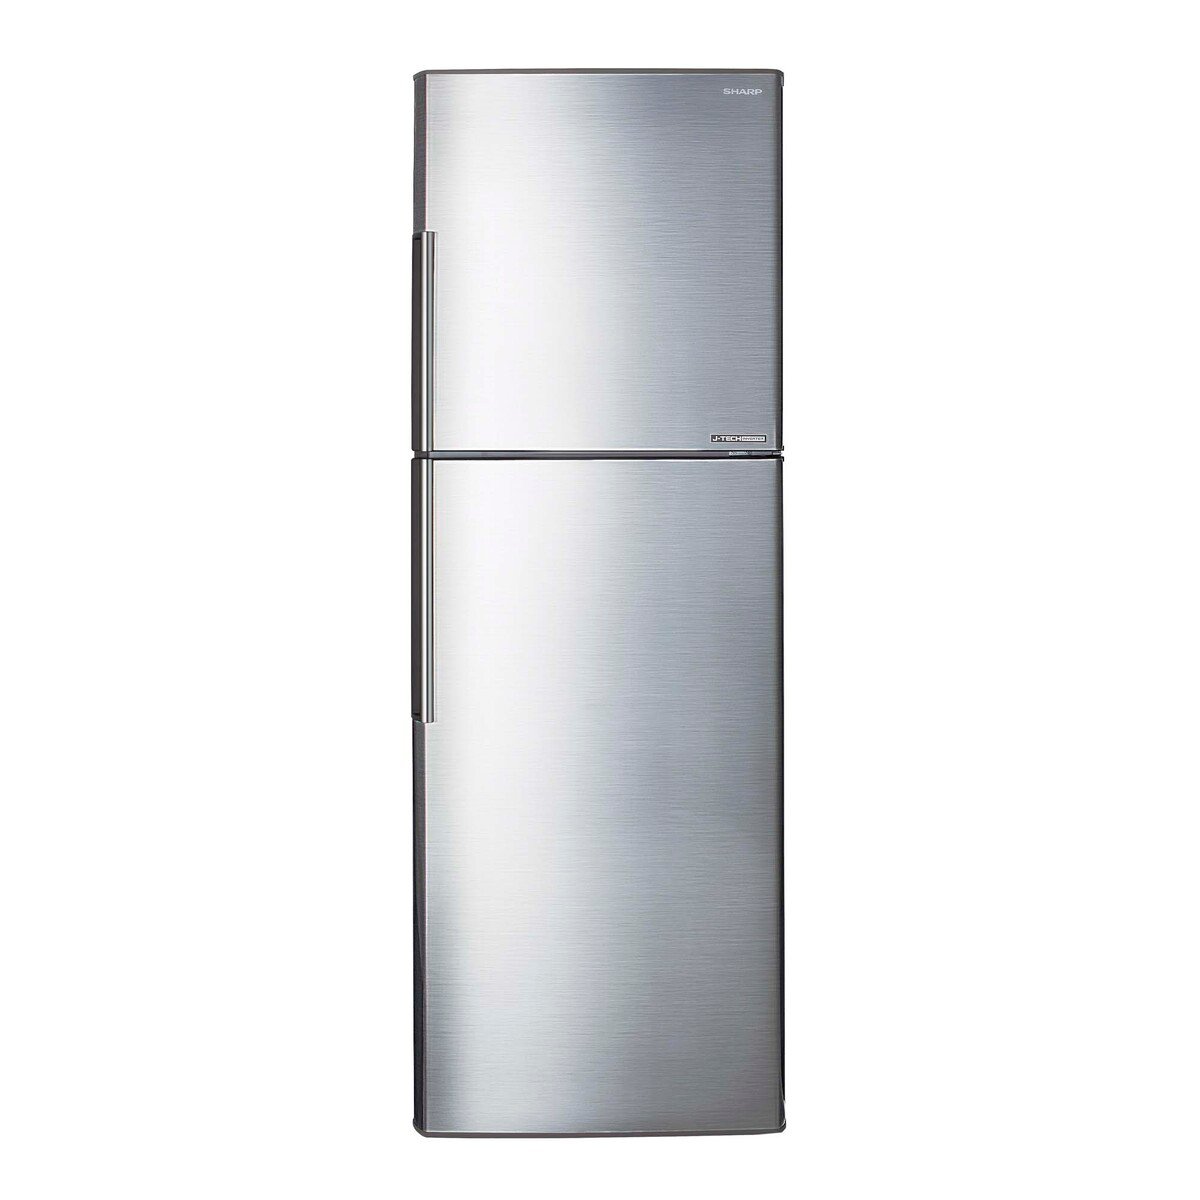 Sharp Double Door Refrigerator S-Popeye Inverter Series SJ-S430-SS3 385LTR Made in Thailand